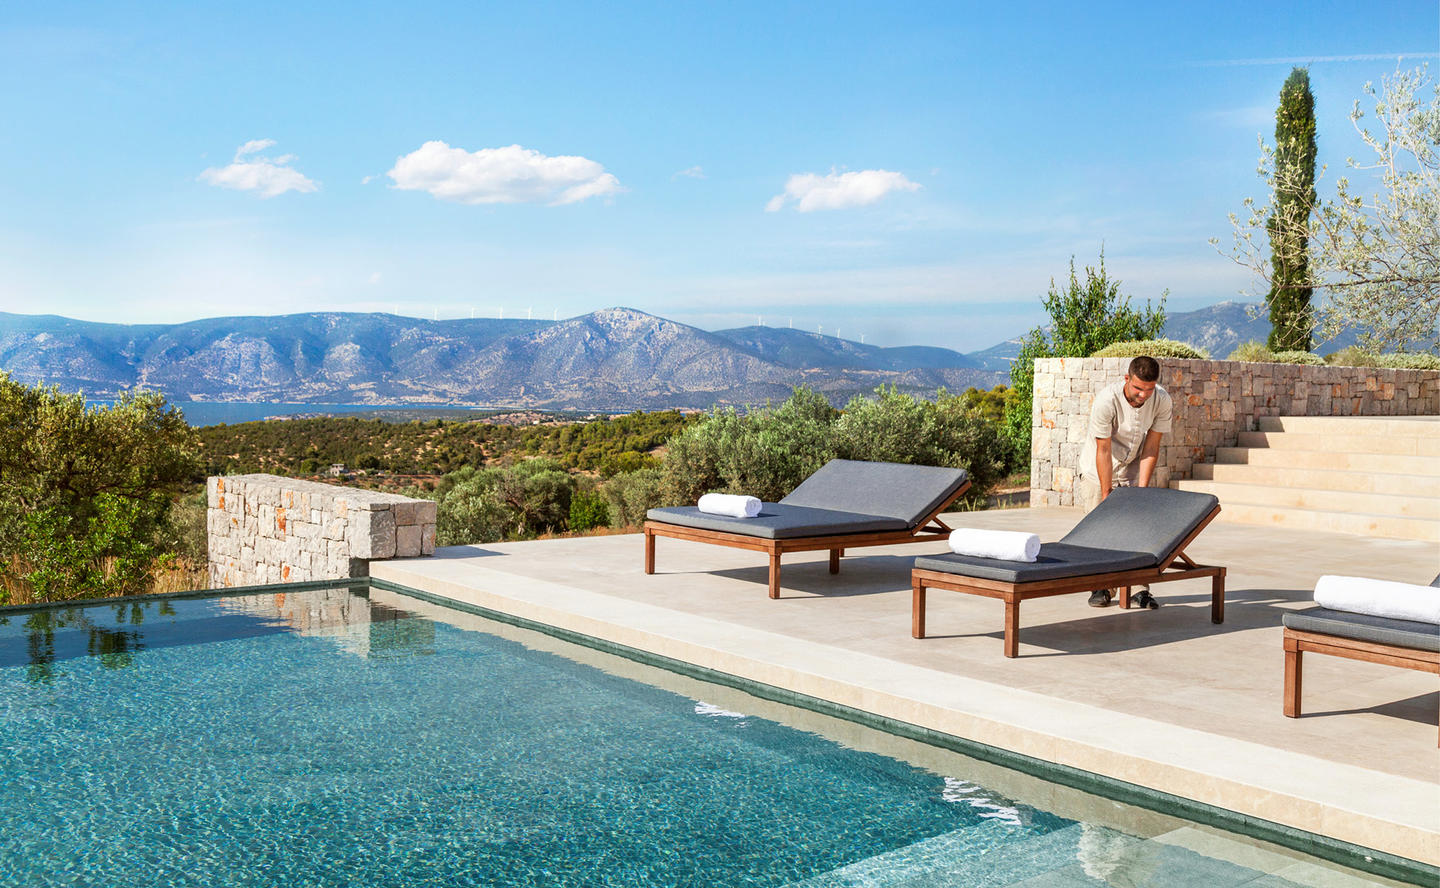 Swimming Pool Views Over Aegean, Four-Bedroom Villa - Amanzoe, Greece